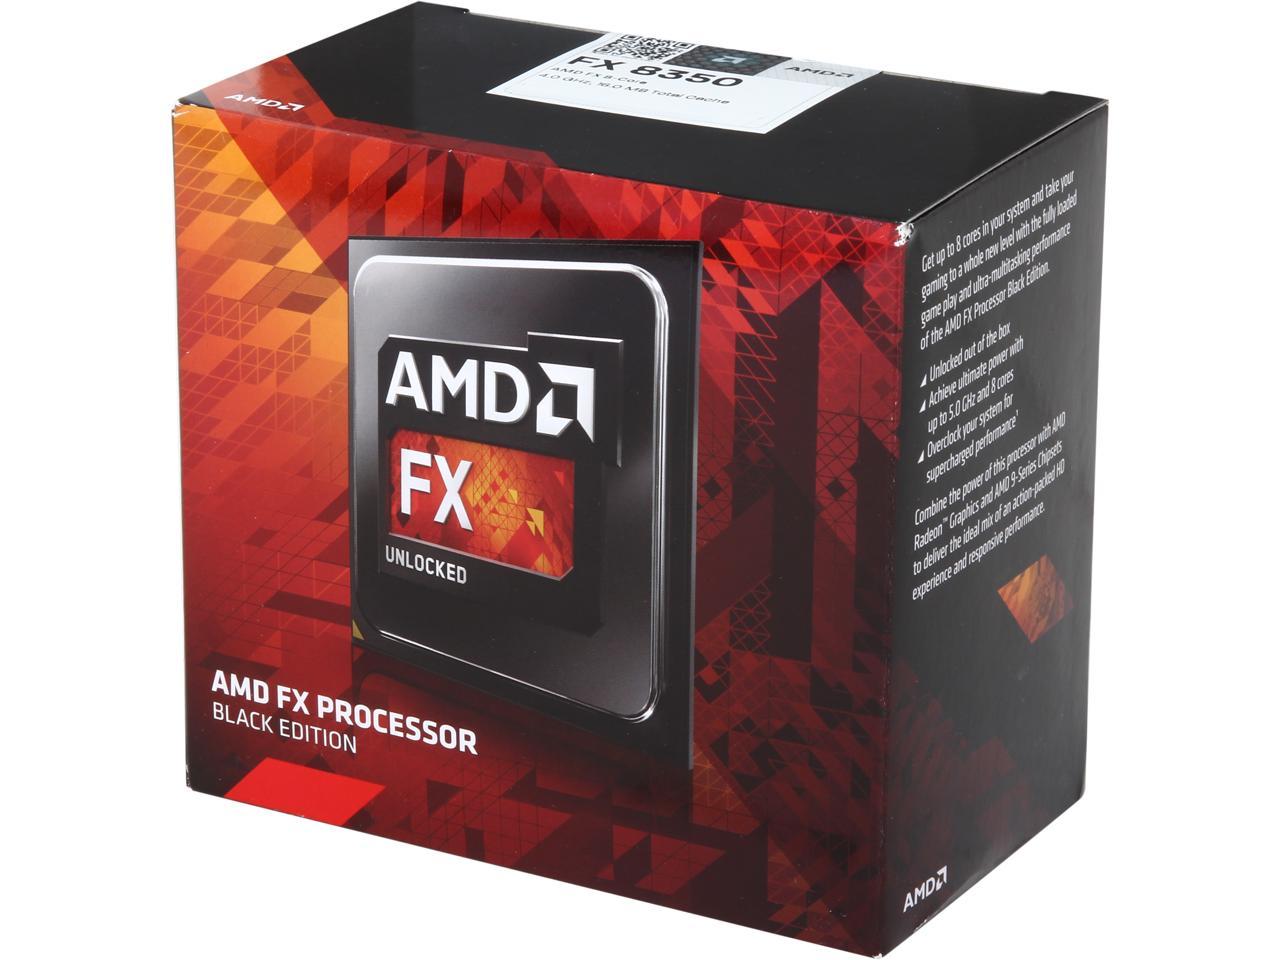 AMD FX-8350 Processeur ASRock Cooler Master 500 W 8 Go DDR3 RAM 1 To Disque Dur HD 7750 DVDRW PC 